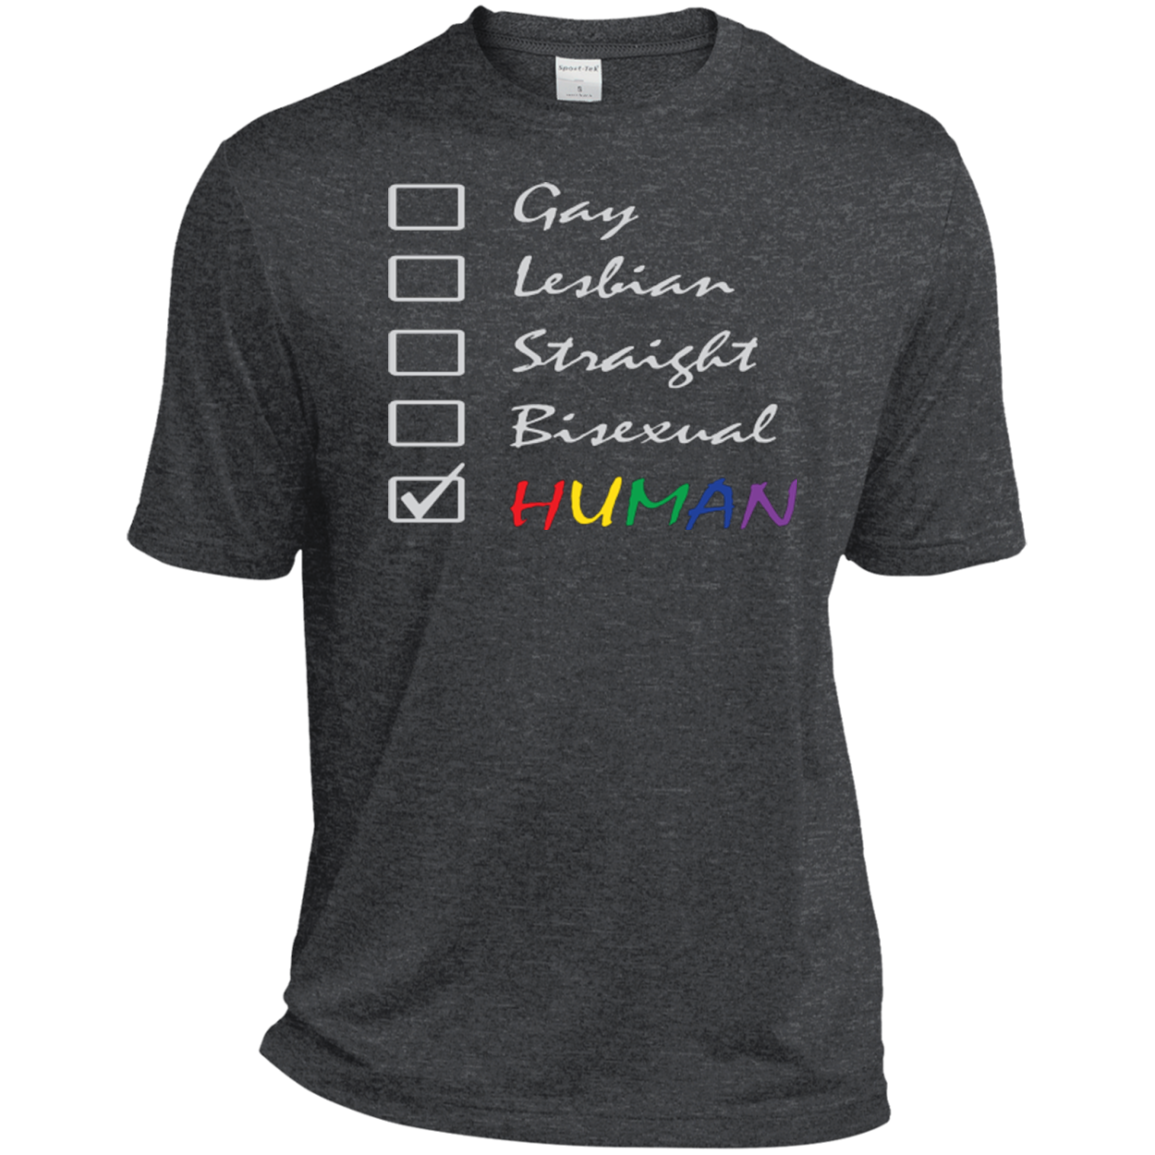 Human Check Box LGBT Pride Dark Grey T Shirt Human Equality LGBT Pride Dark Grey Tshirt for Men